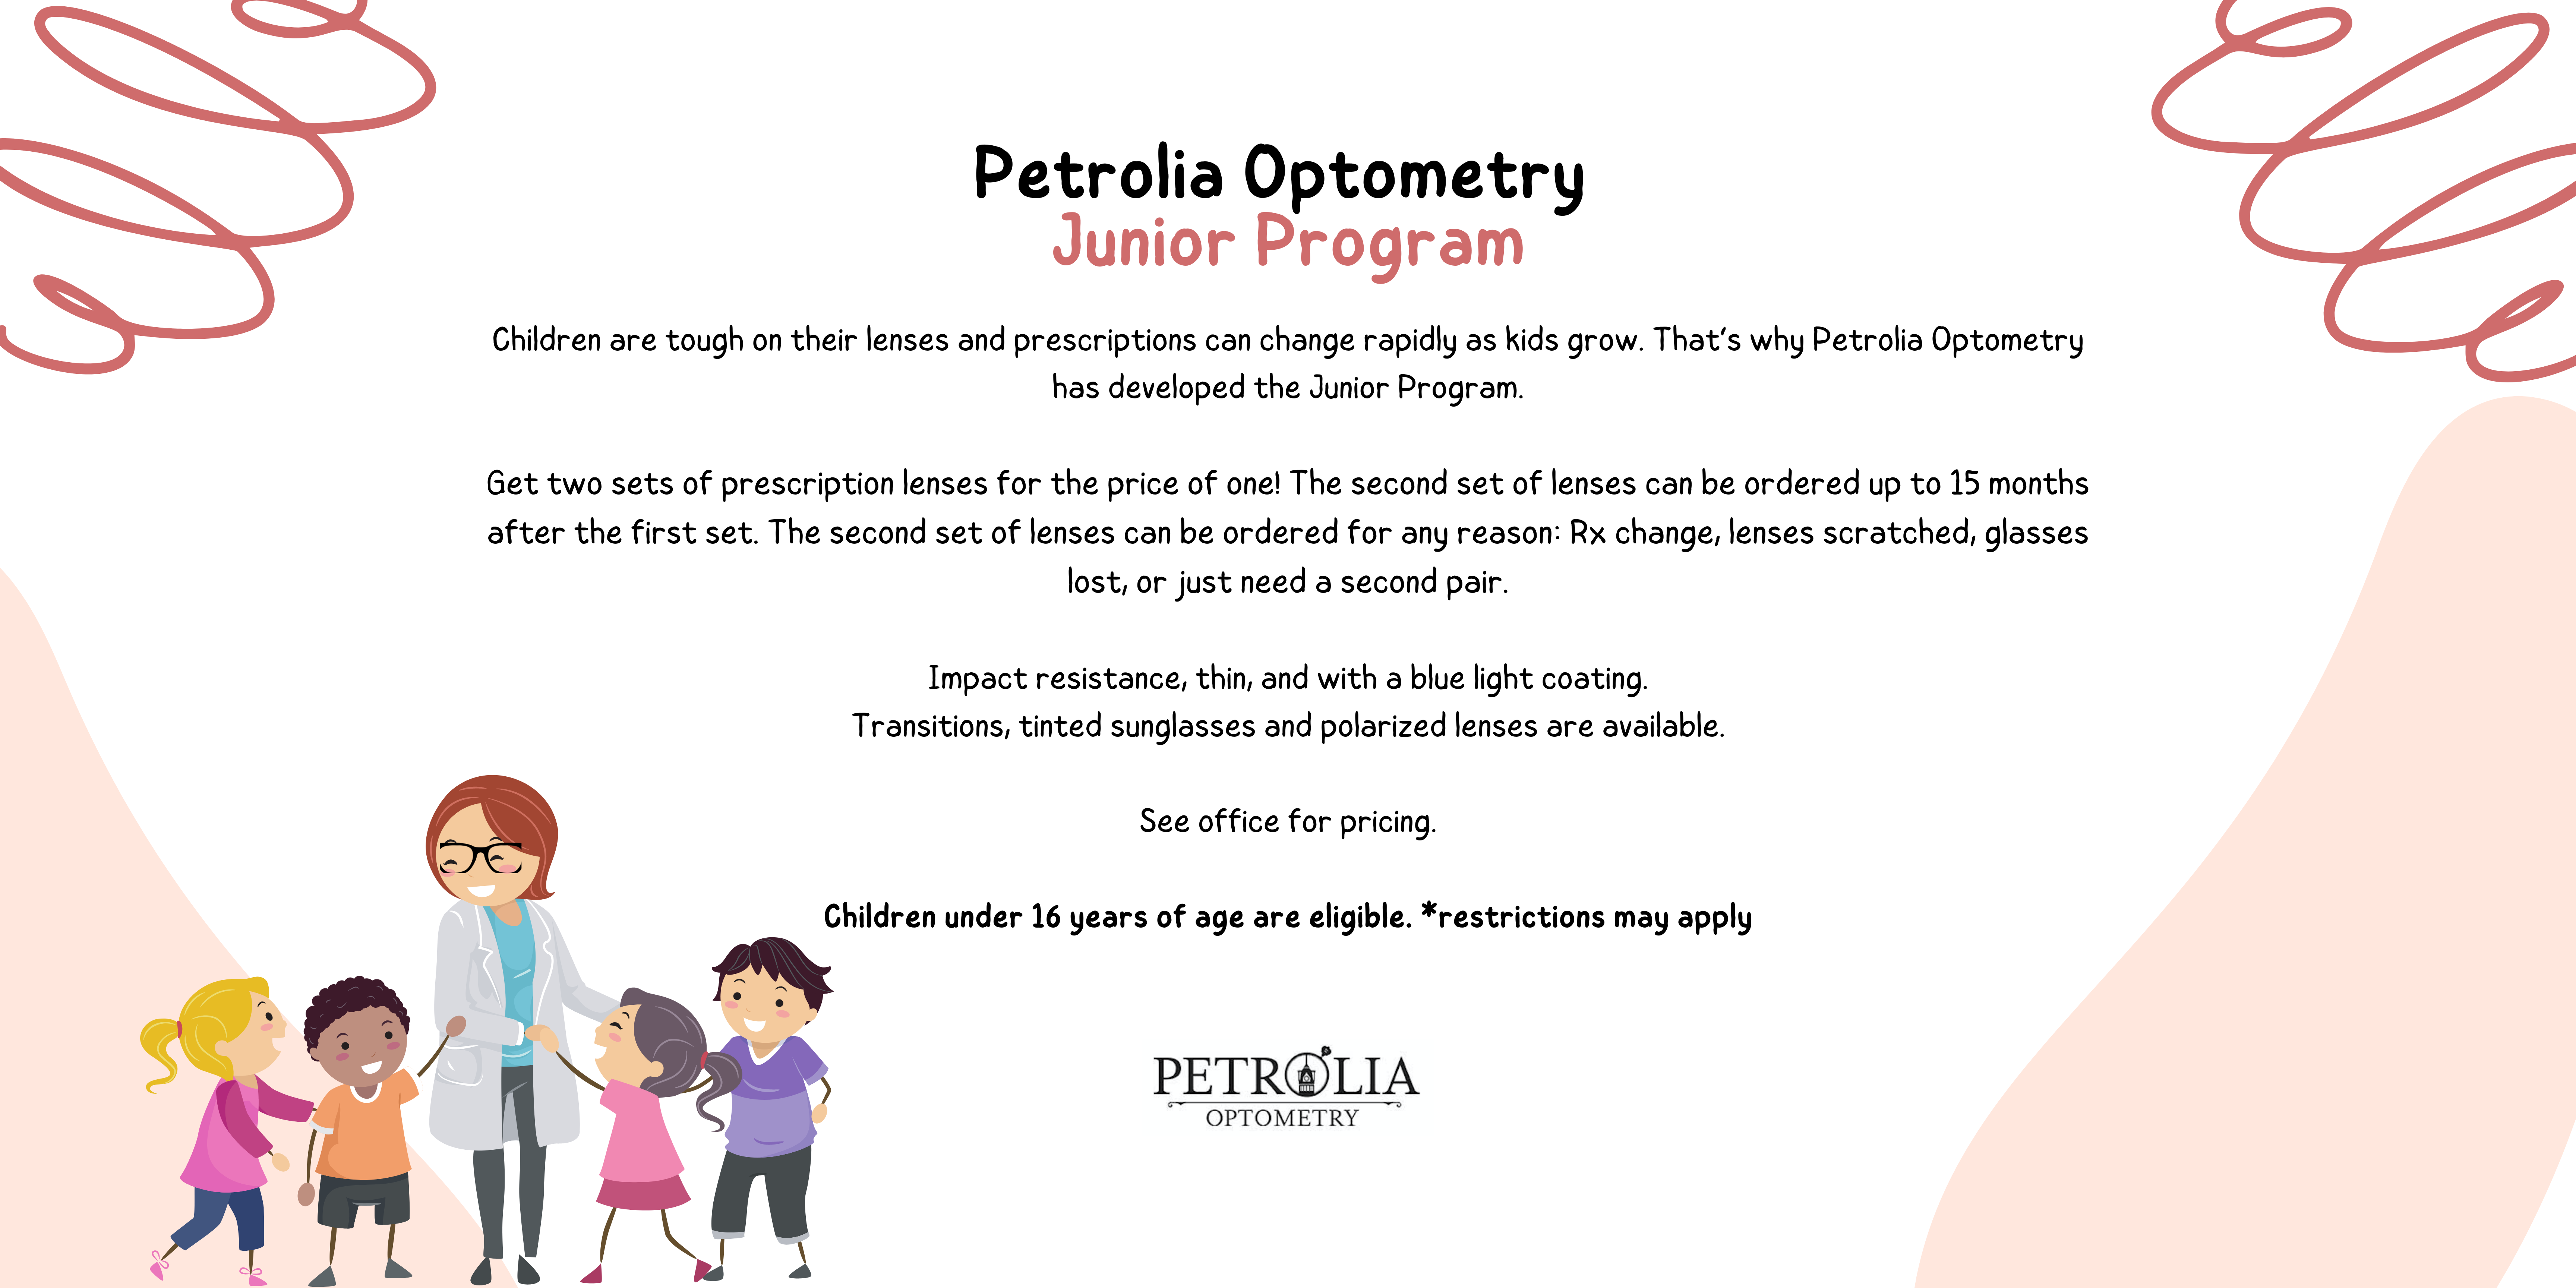 Petrolia Optometry Junior Program